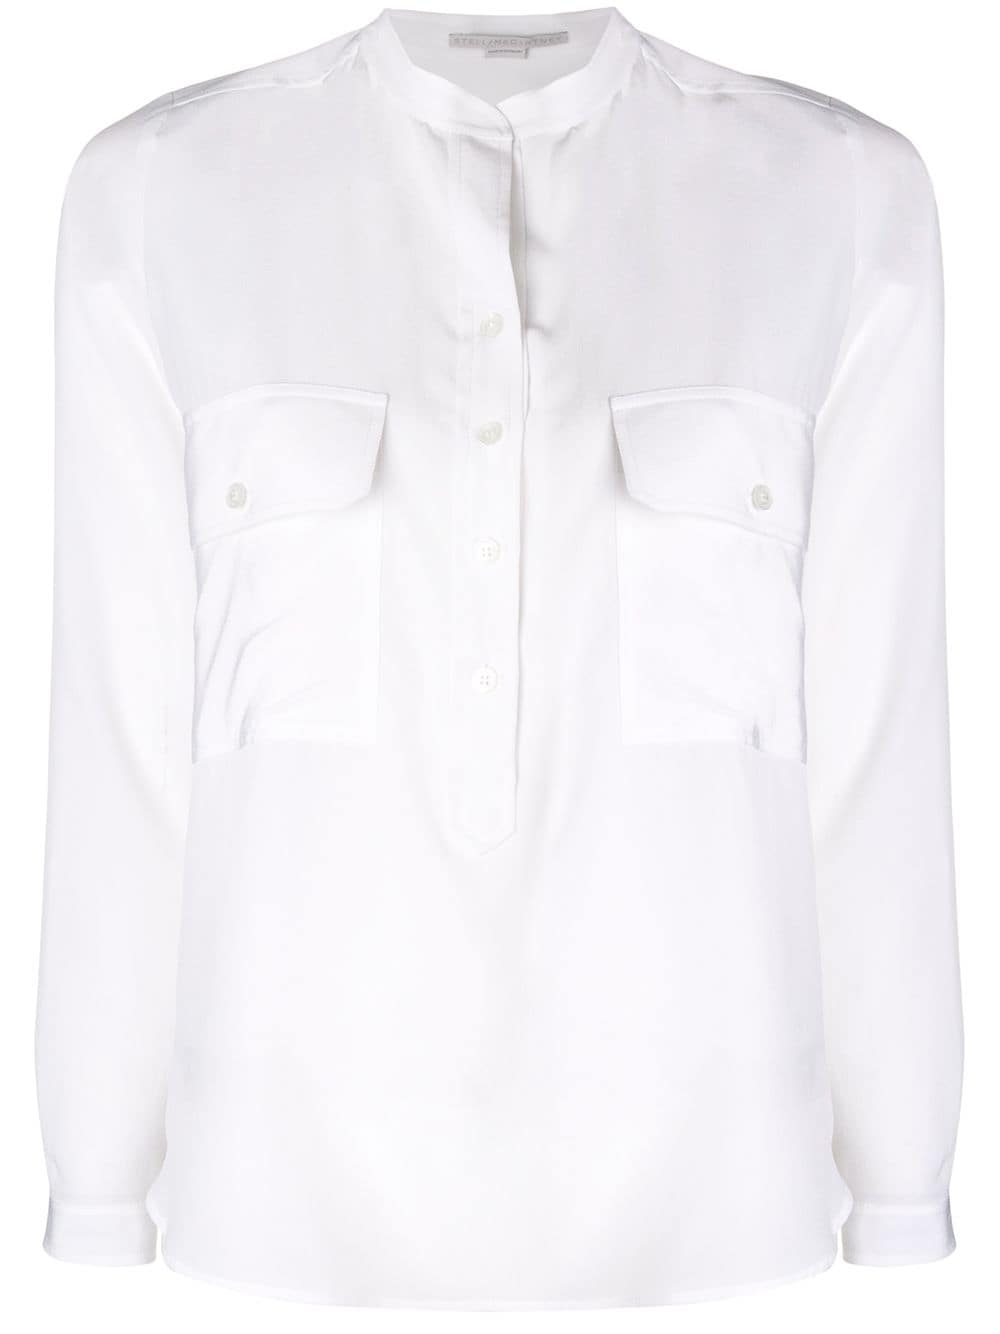 Stella McCartney collarless shirt - White